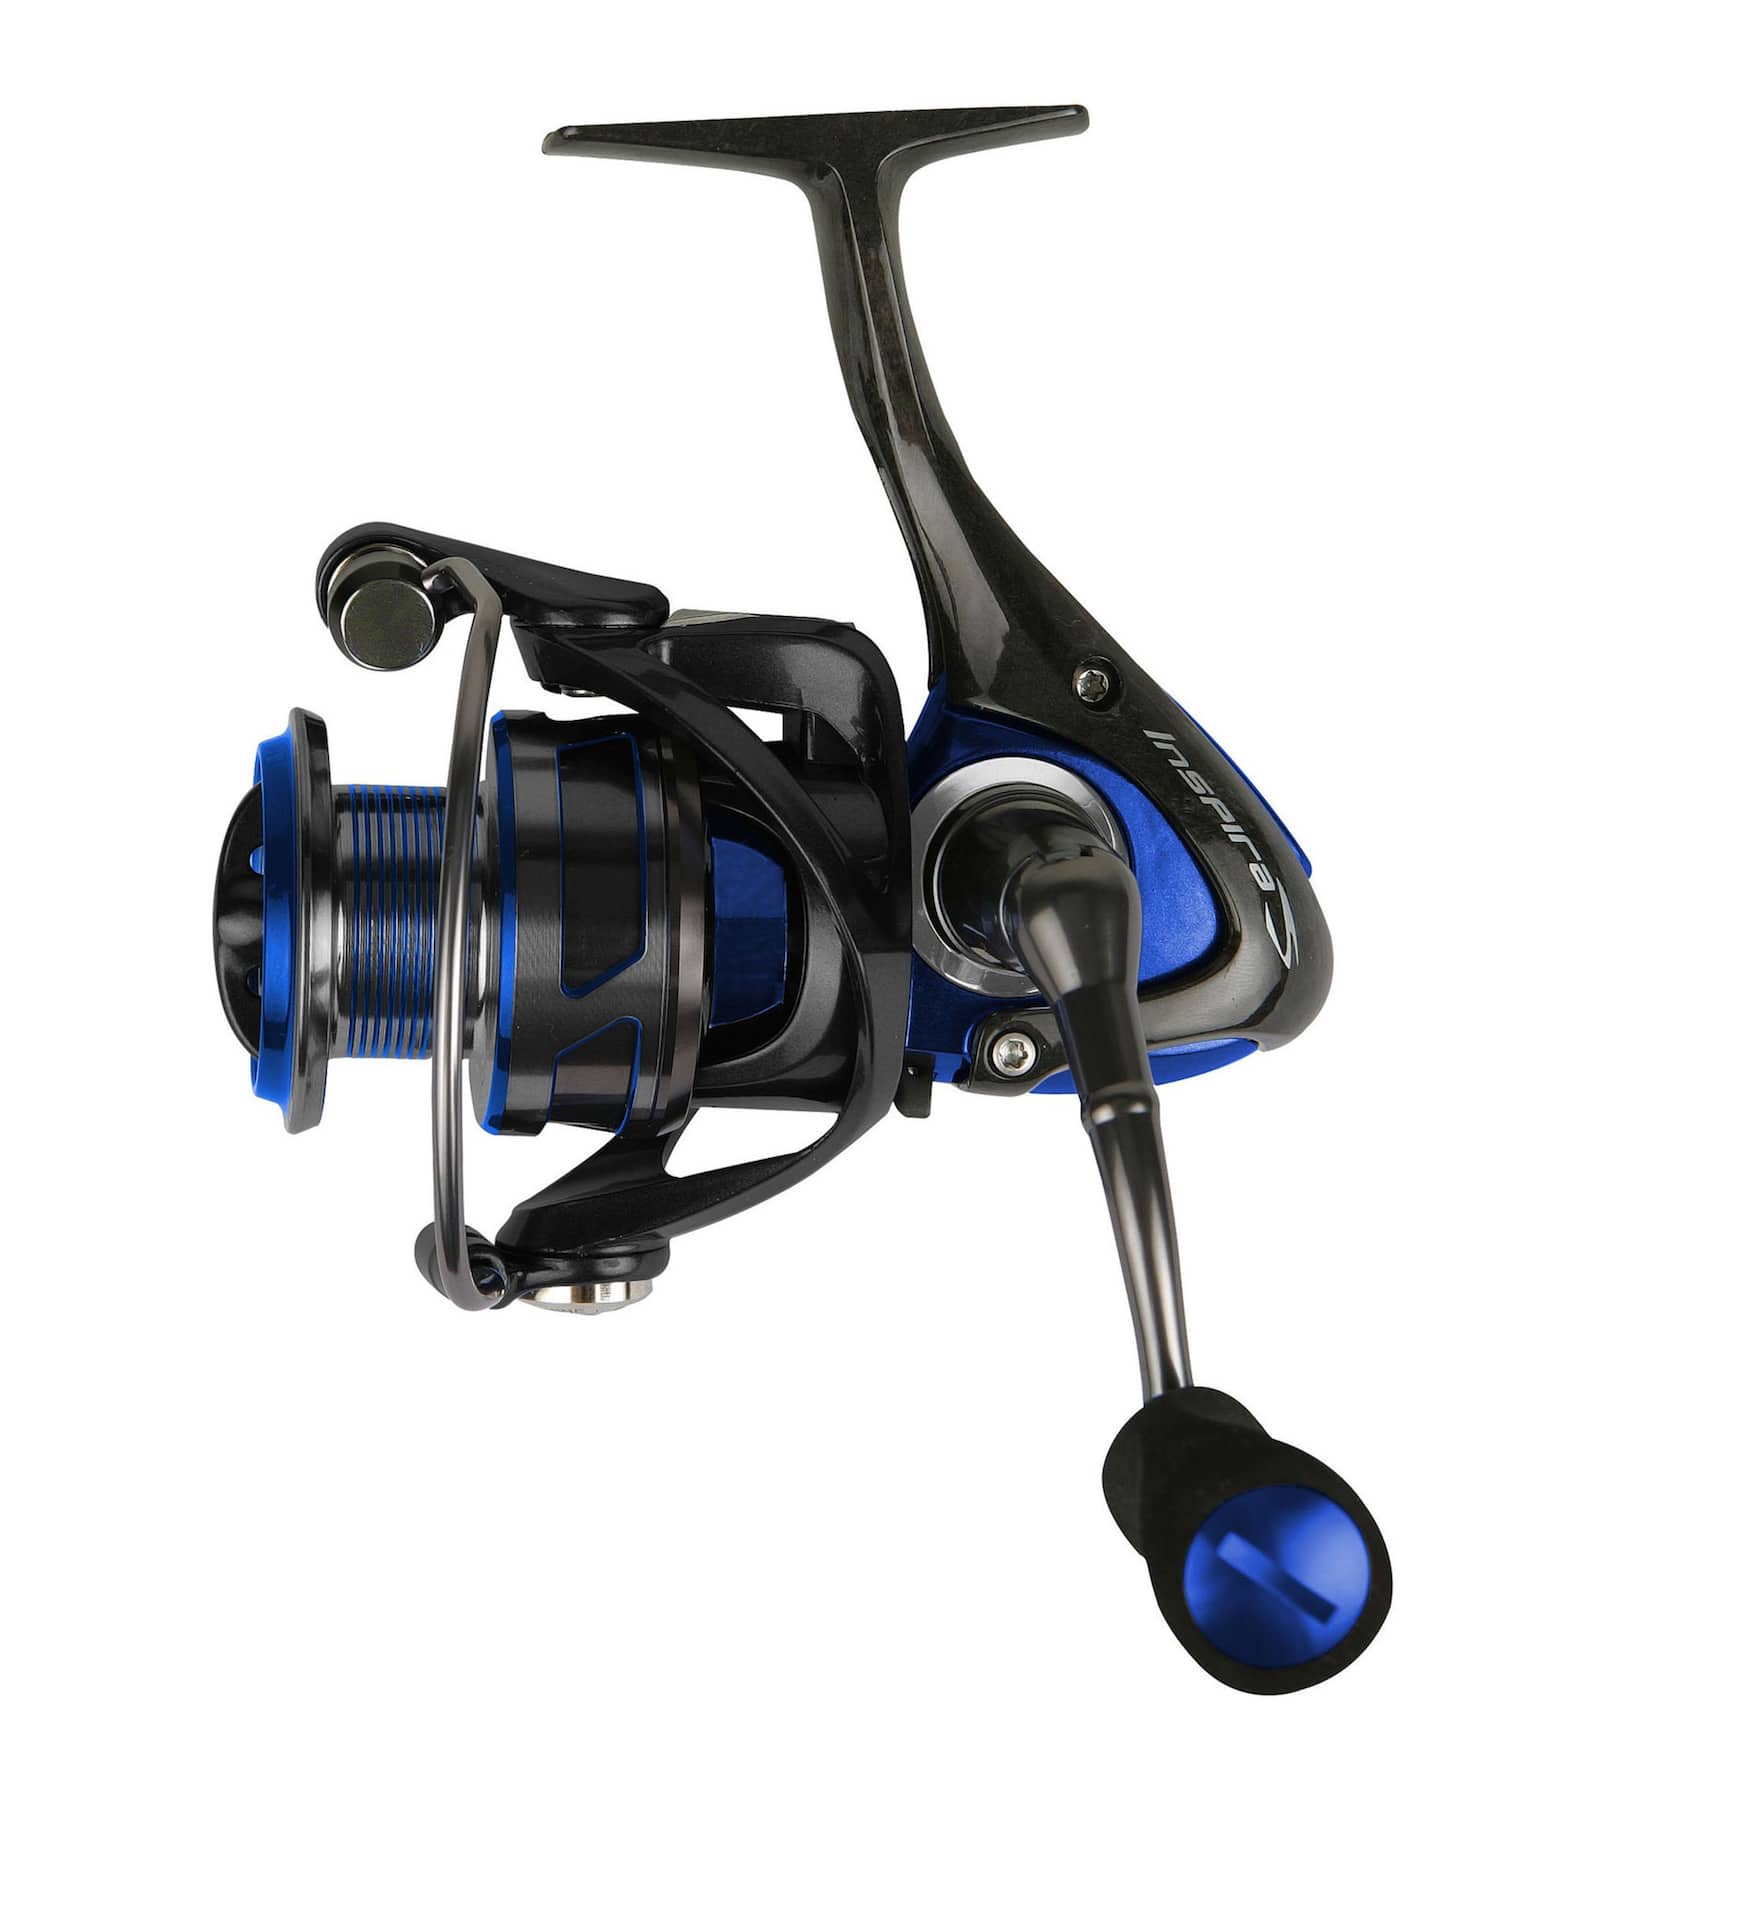 Mitchell 300 Pro Spinning Fishing Reel, Advanced Polymeric Body